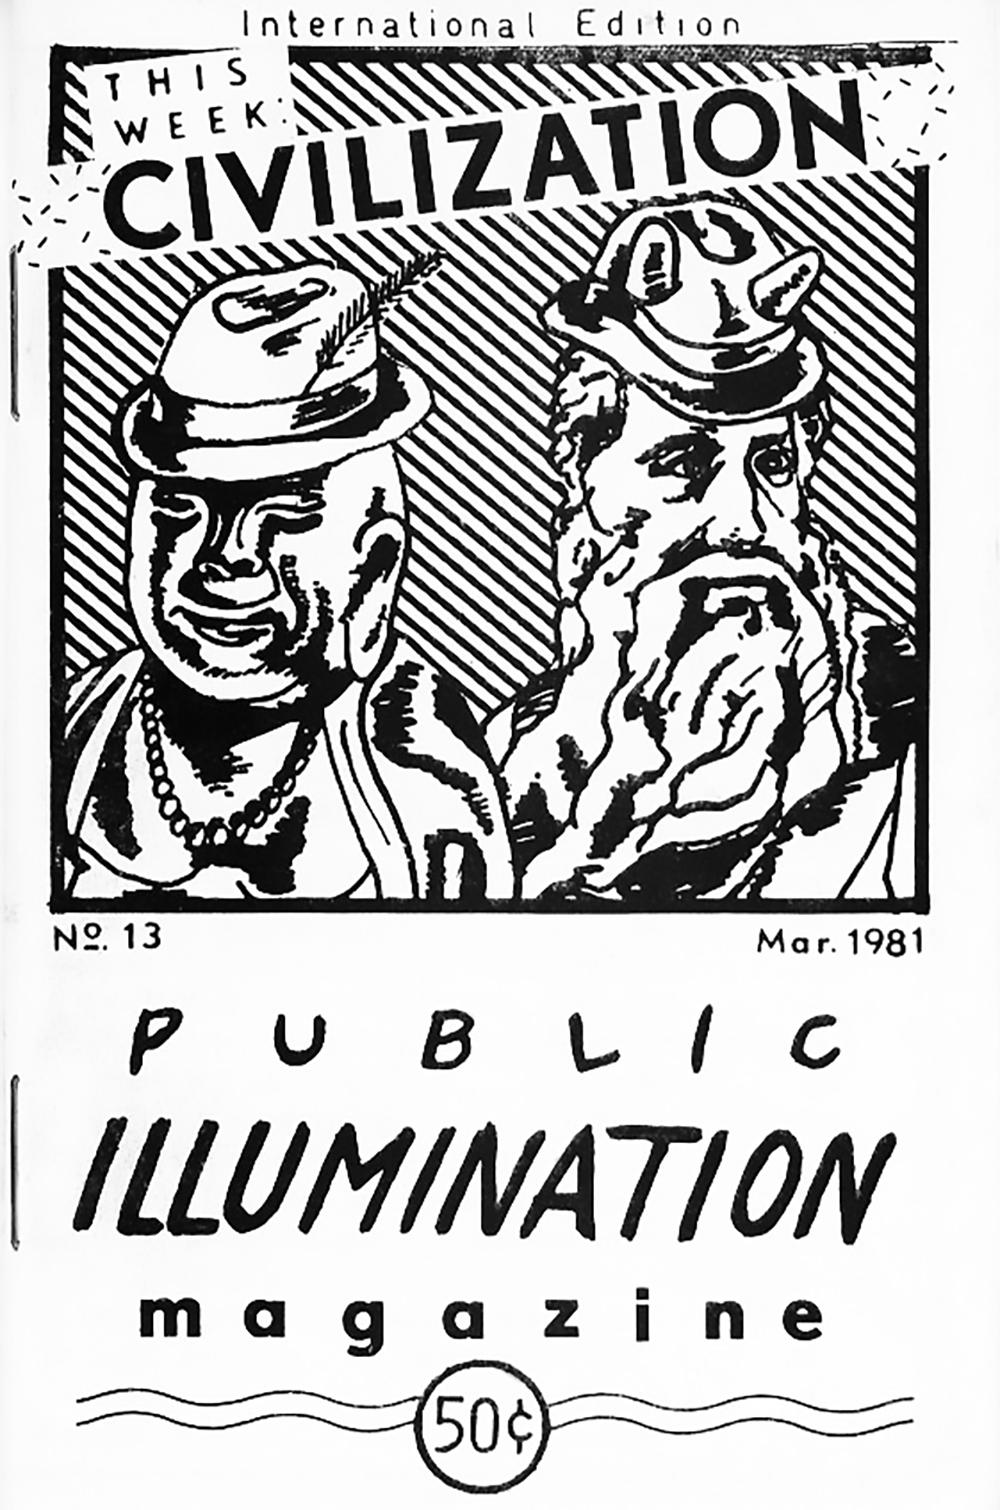 Keith Haring Public Illumination 1981 1